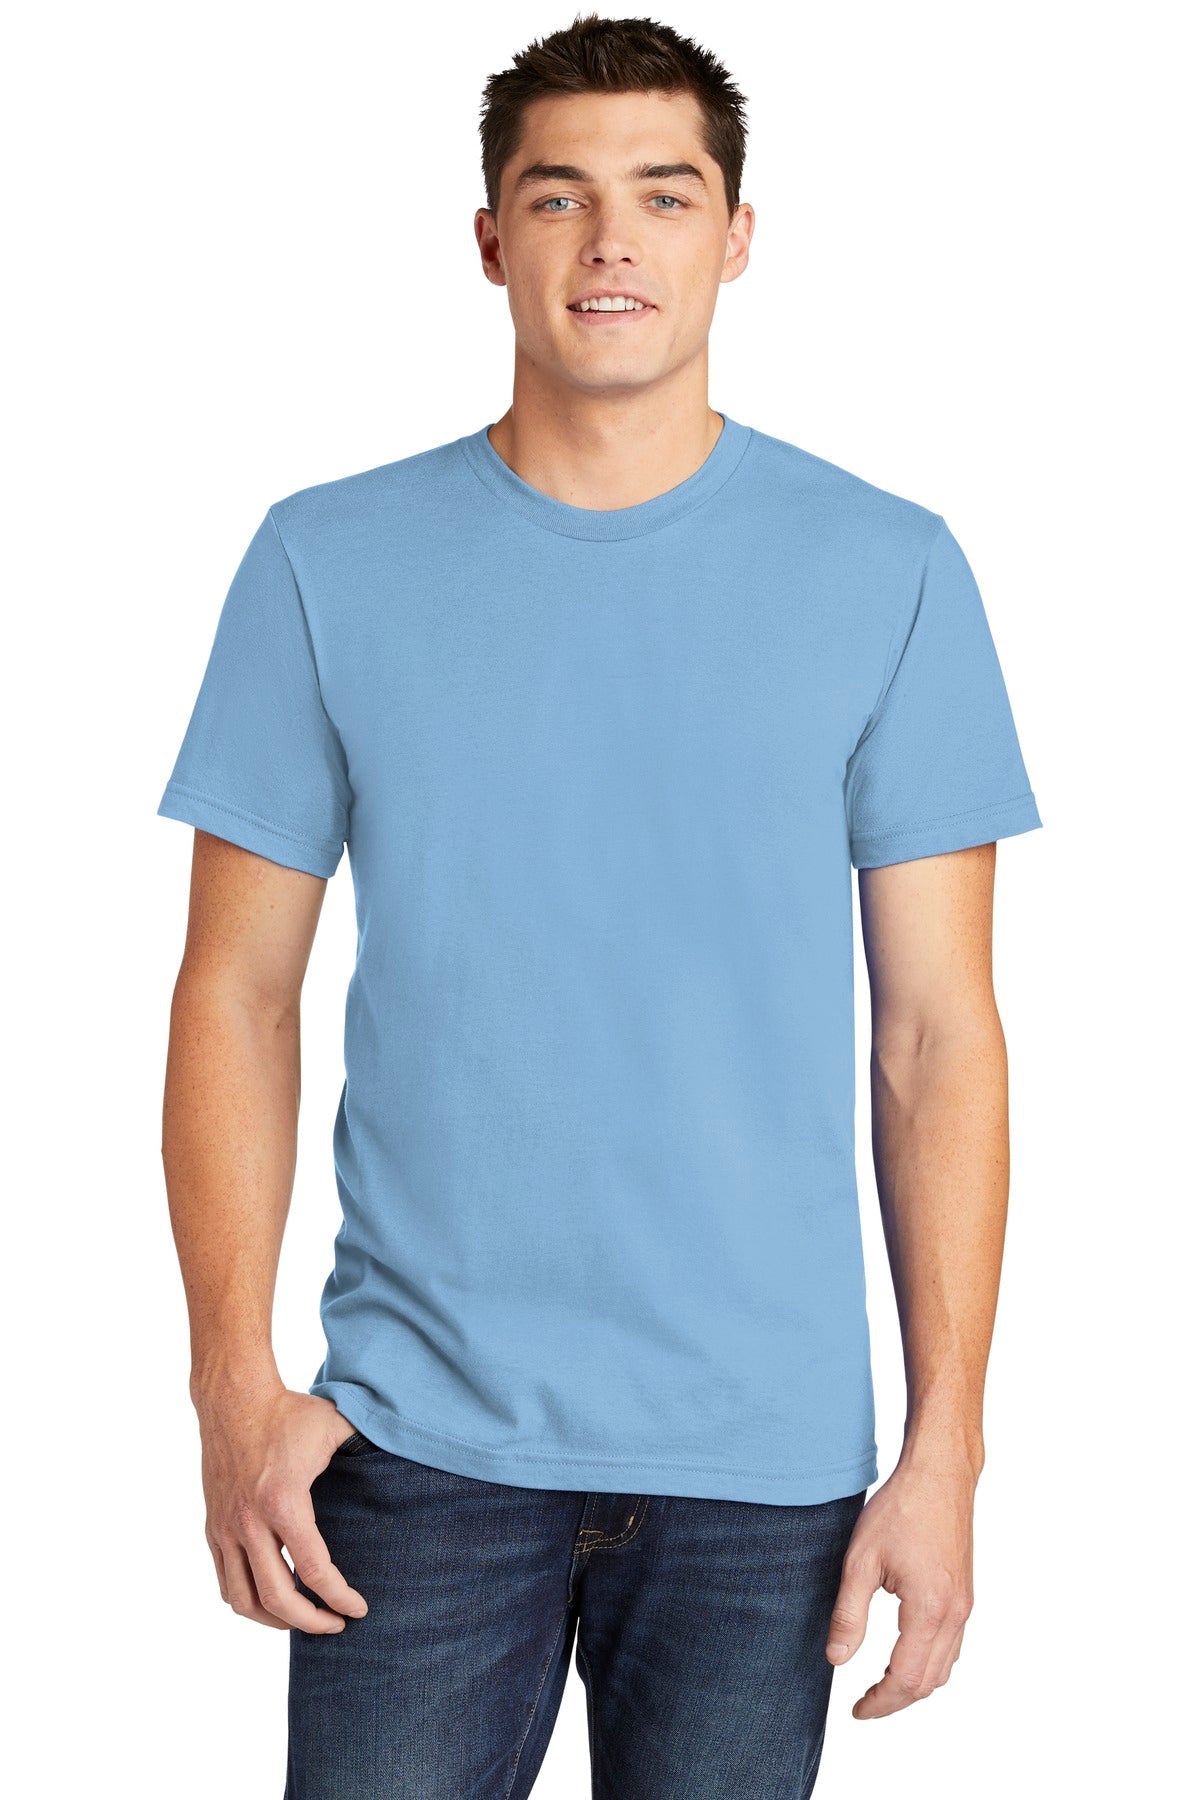 American Apparel ® Fine Jersey T-Shirt. 2001W [Baby Blue] - DFW Impression